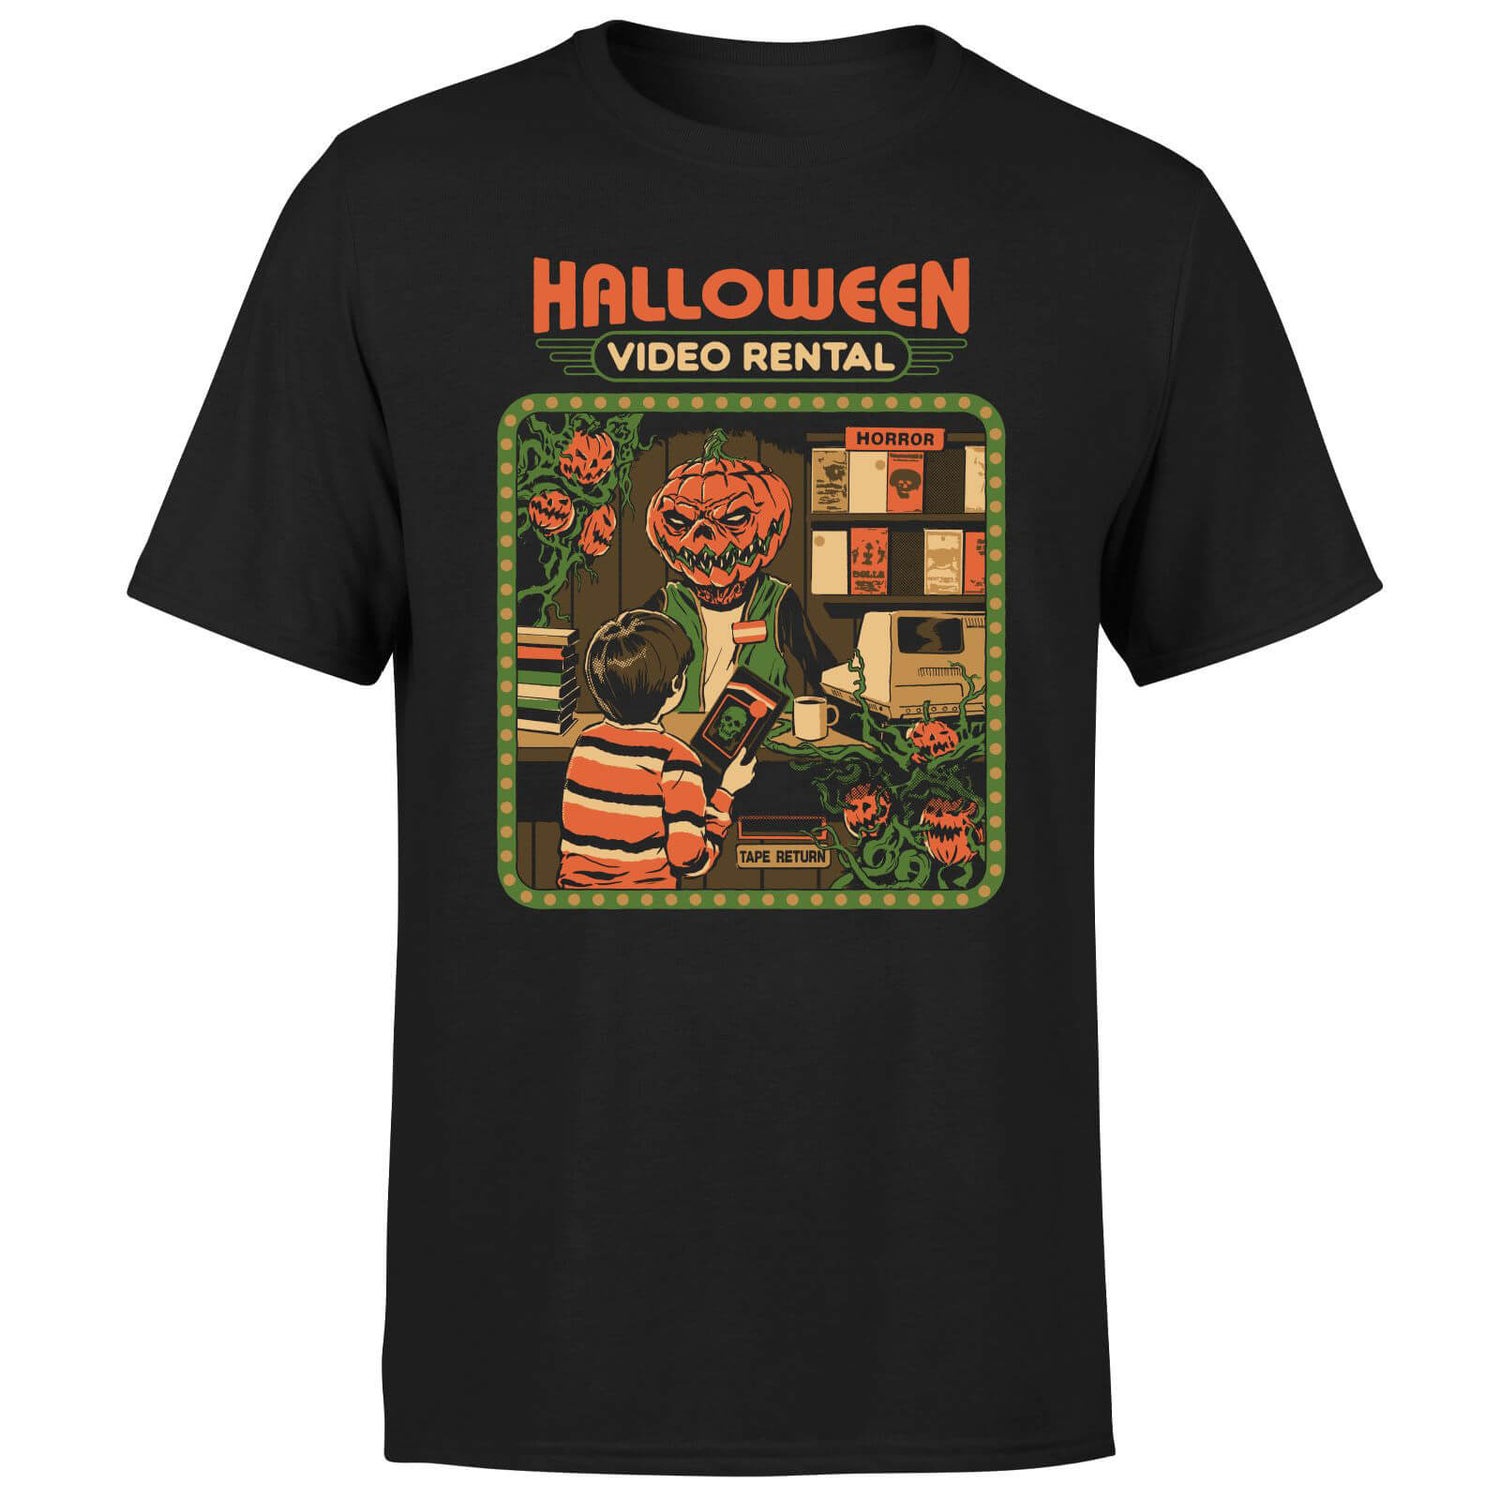 Halloween Video Rental Men's T-Shirt - Black